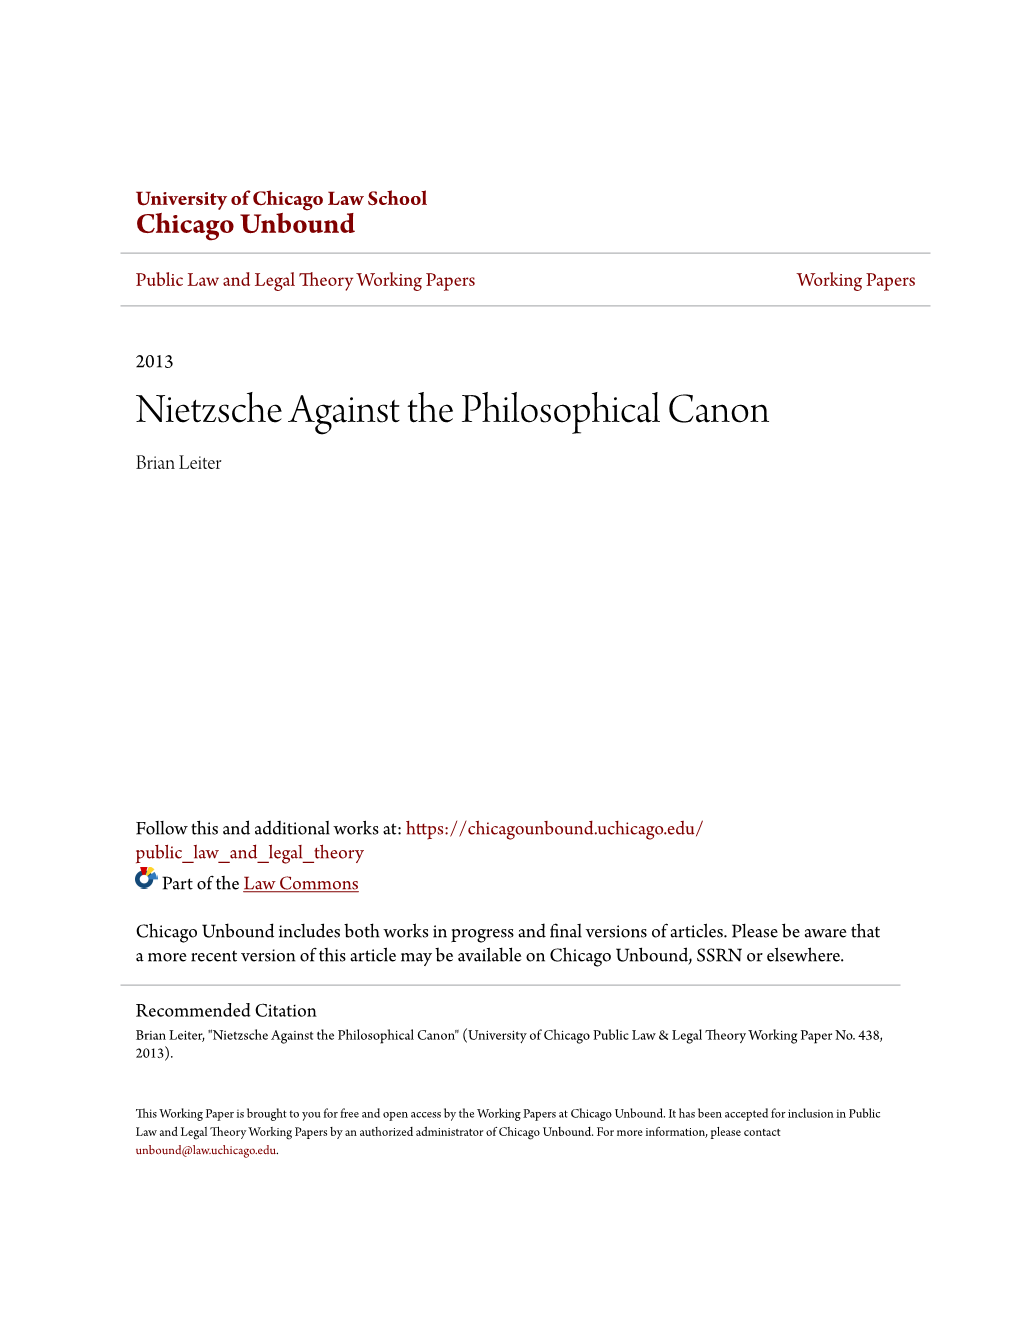 Nietzsche Against the Philosophical Canon Brian Leiter